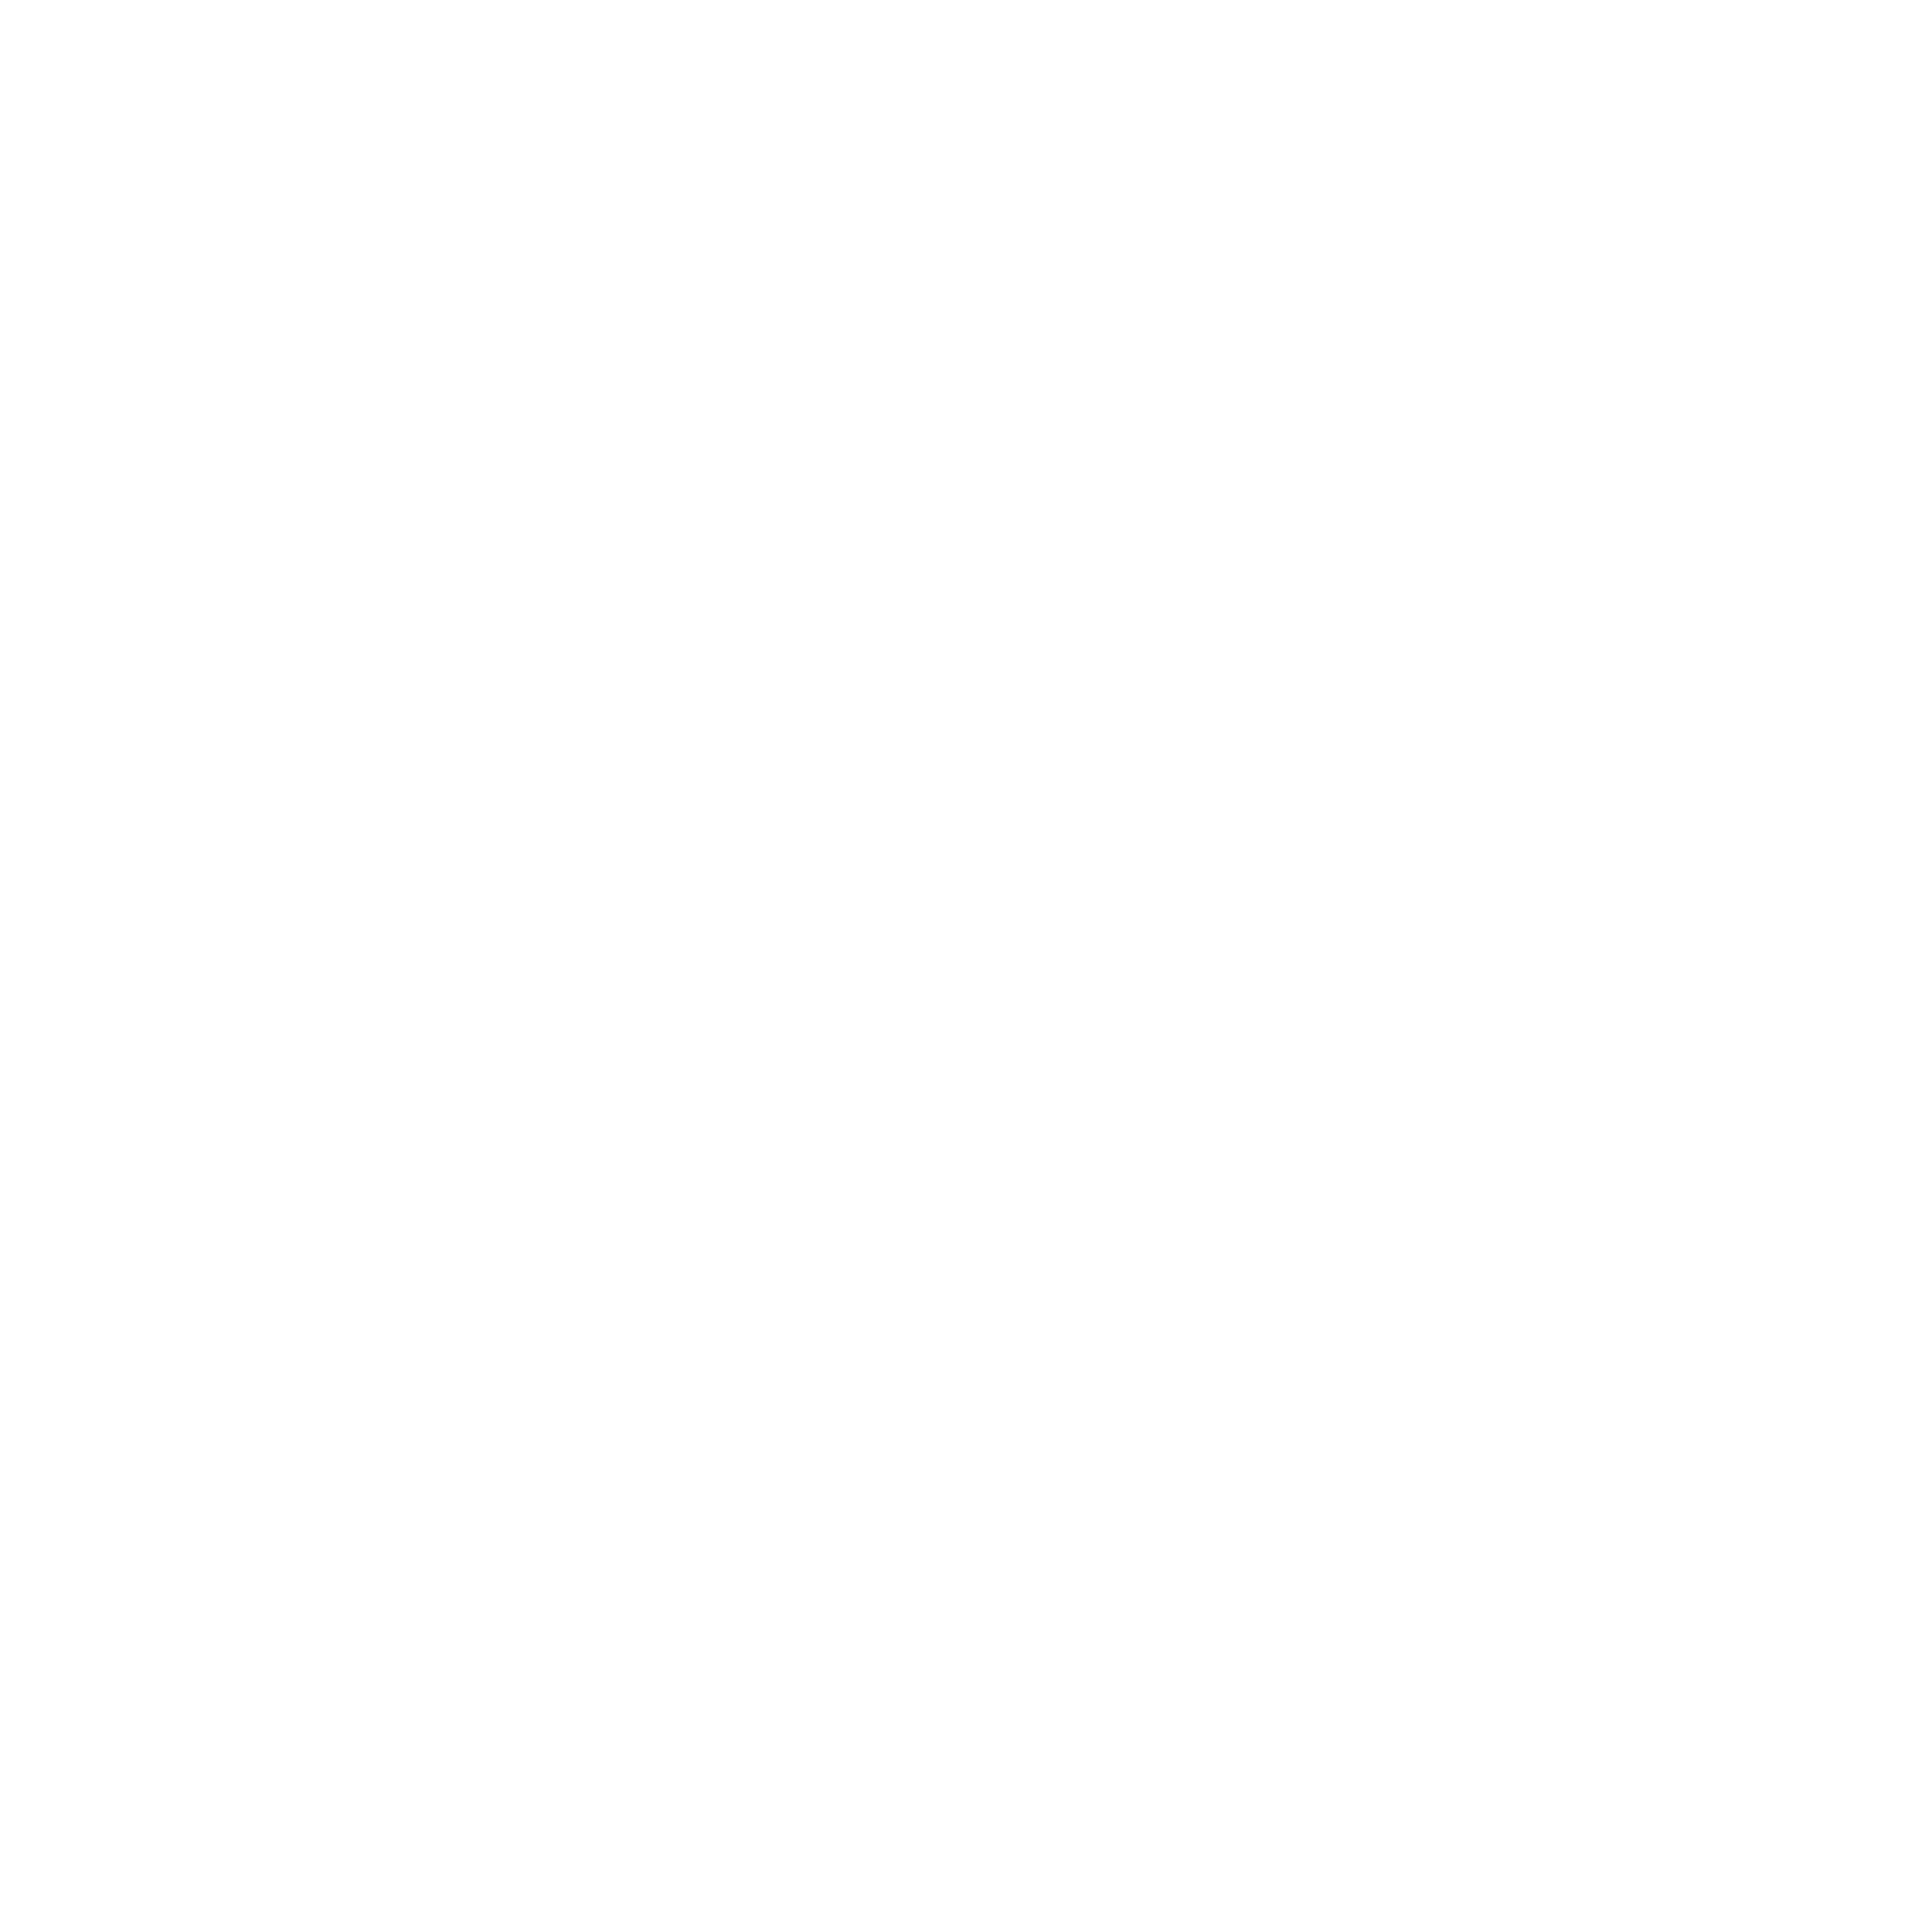 bkActiv logo